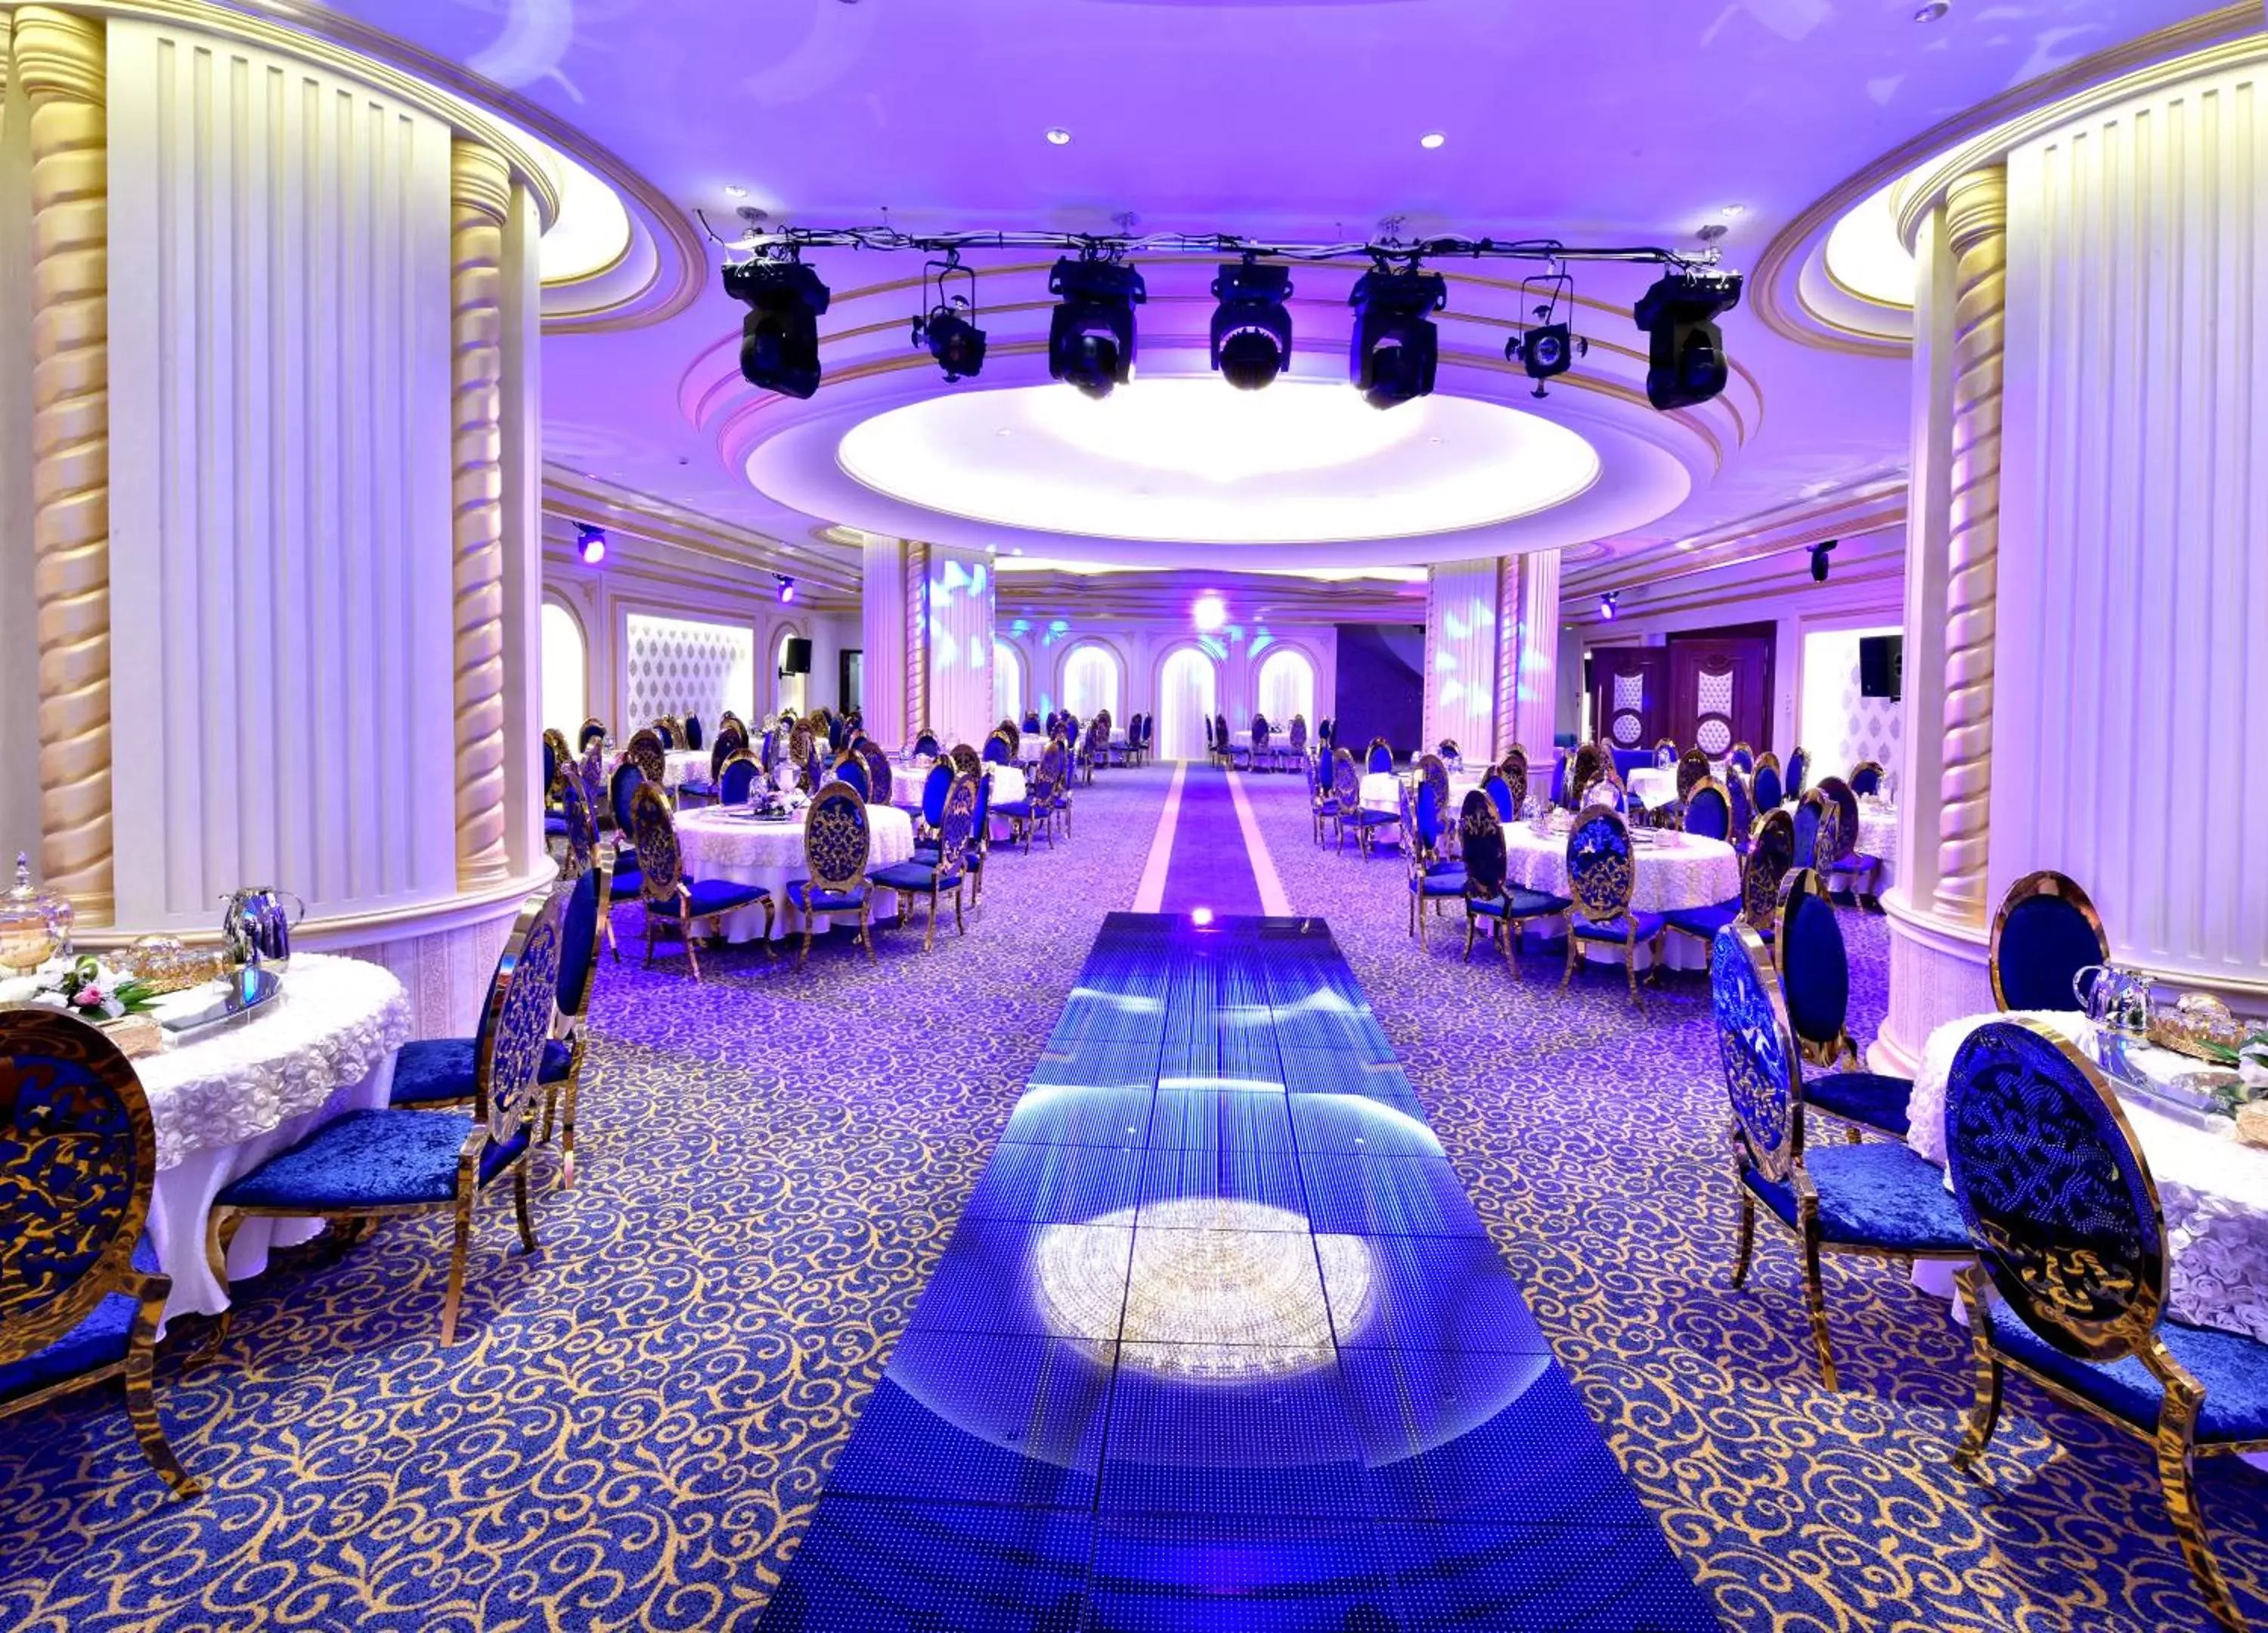 Banquet/Function facilities, Banquet Facilities in Iridium 70 Hotel